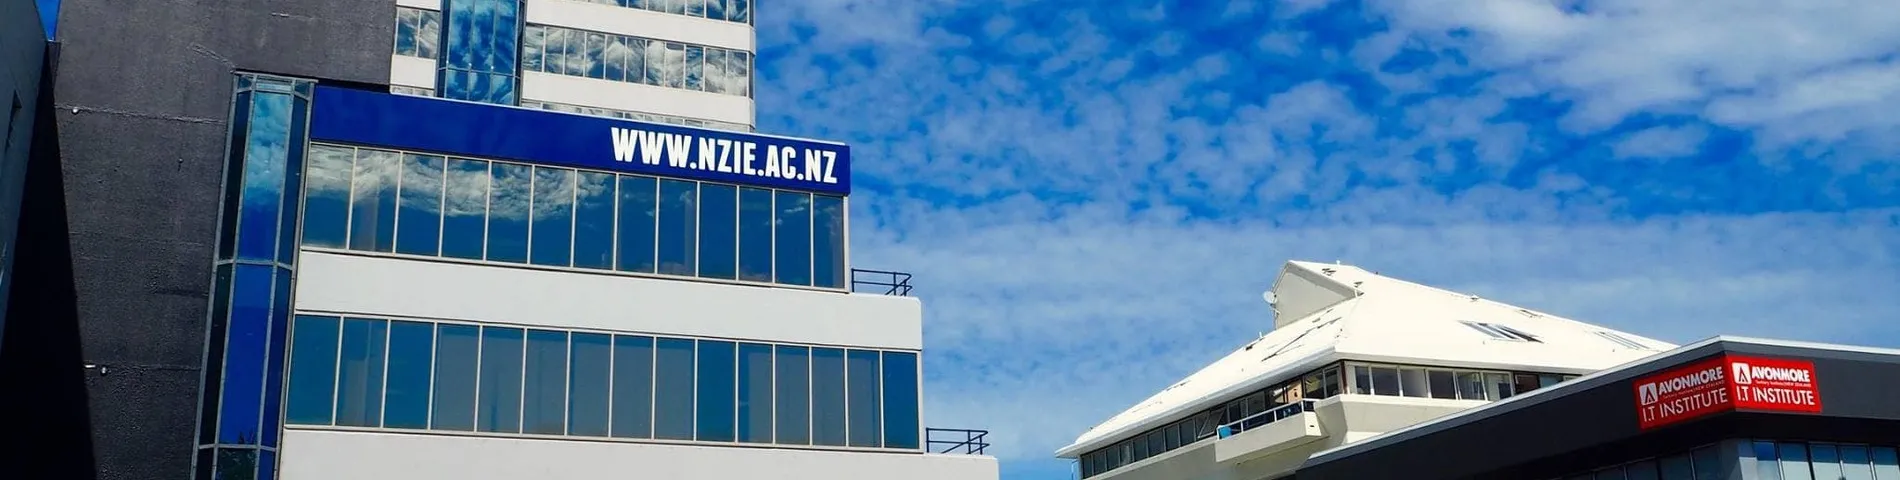 Imagen 1 de la escuela NZIE - New Zealand Institute of Education